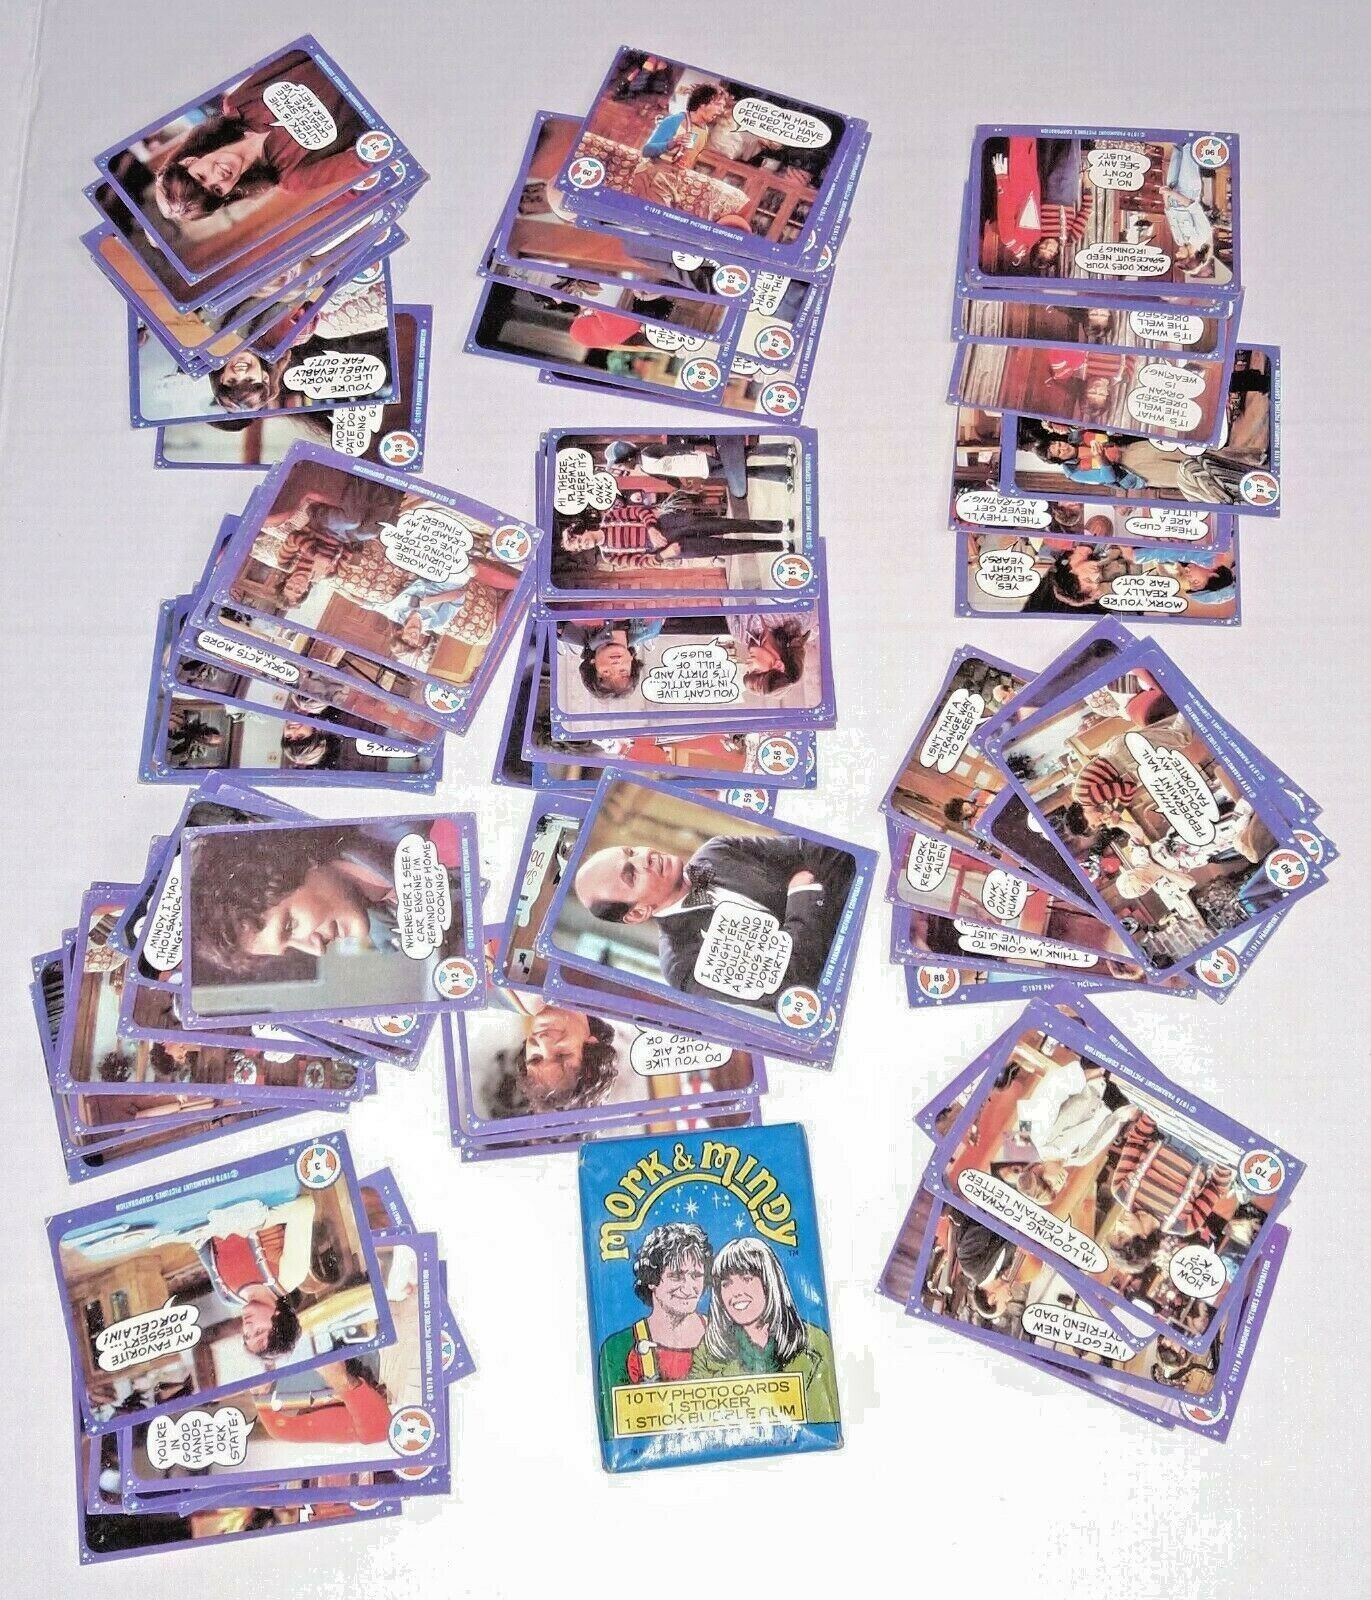 Mork & Mindy - Vintage 1978/79 Topps Trading Cards Lot (95 + 1 unopened pack)